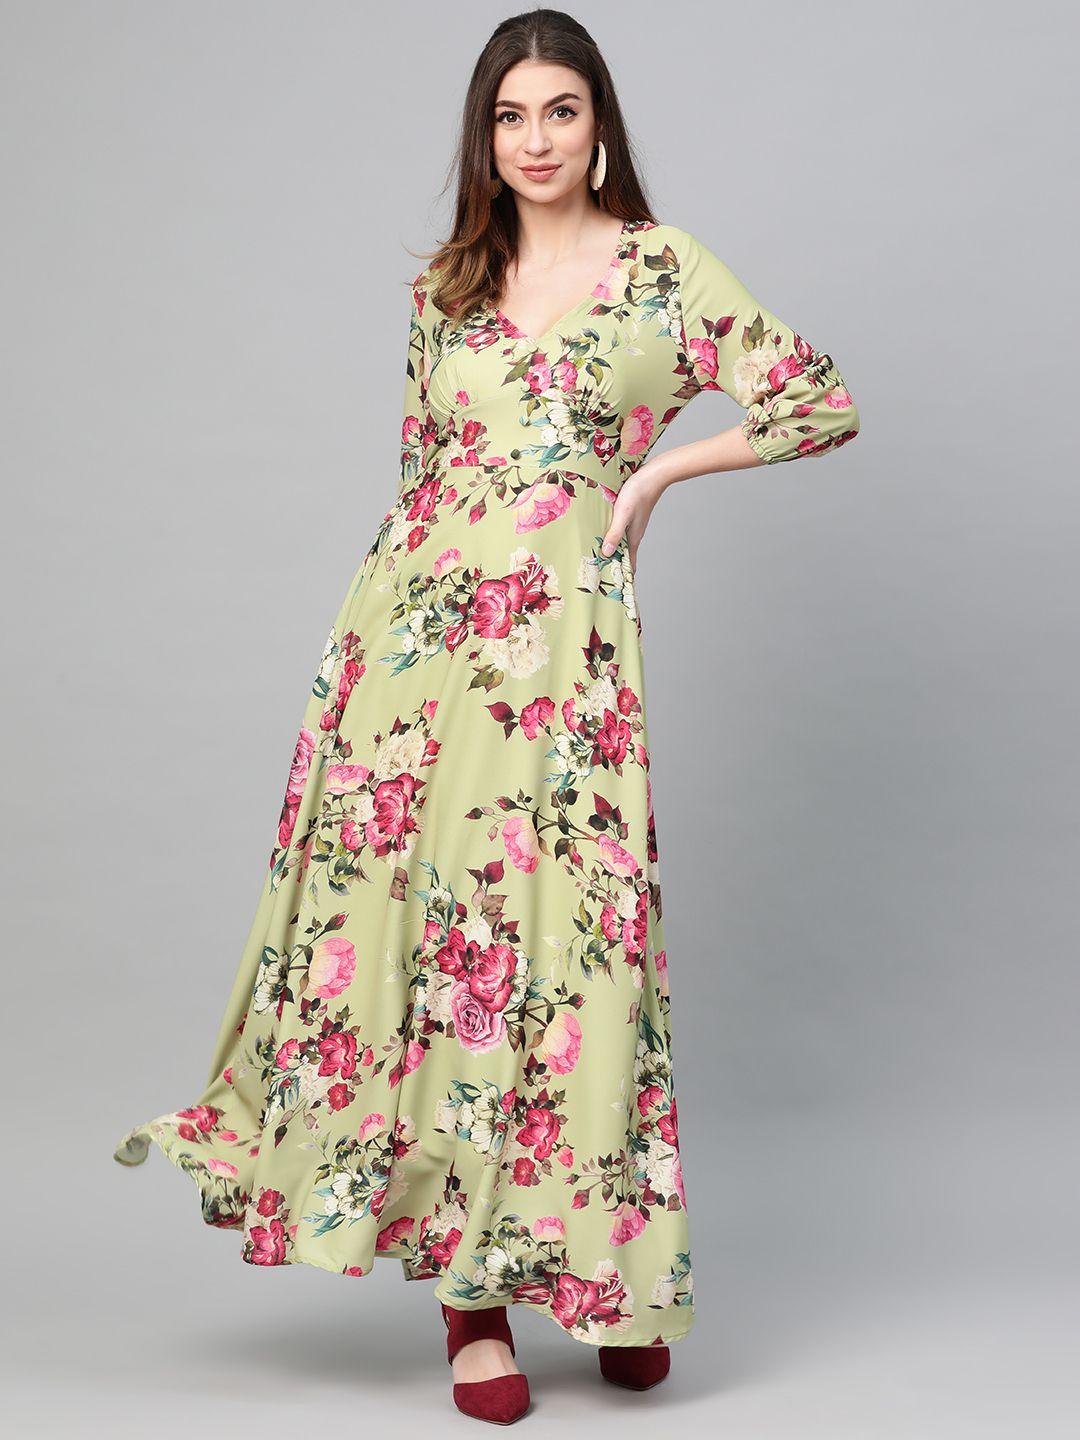 sassafras lime green & pink floral printed maxi dress